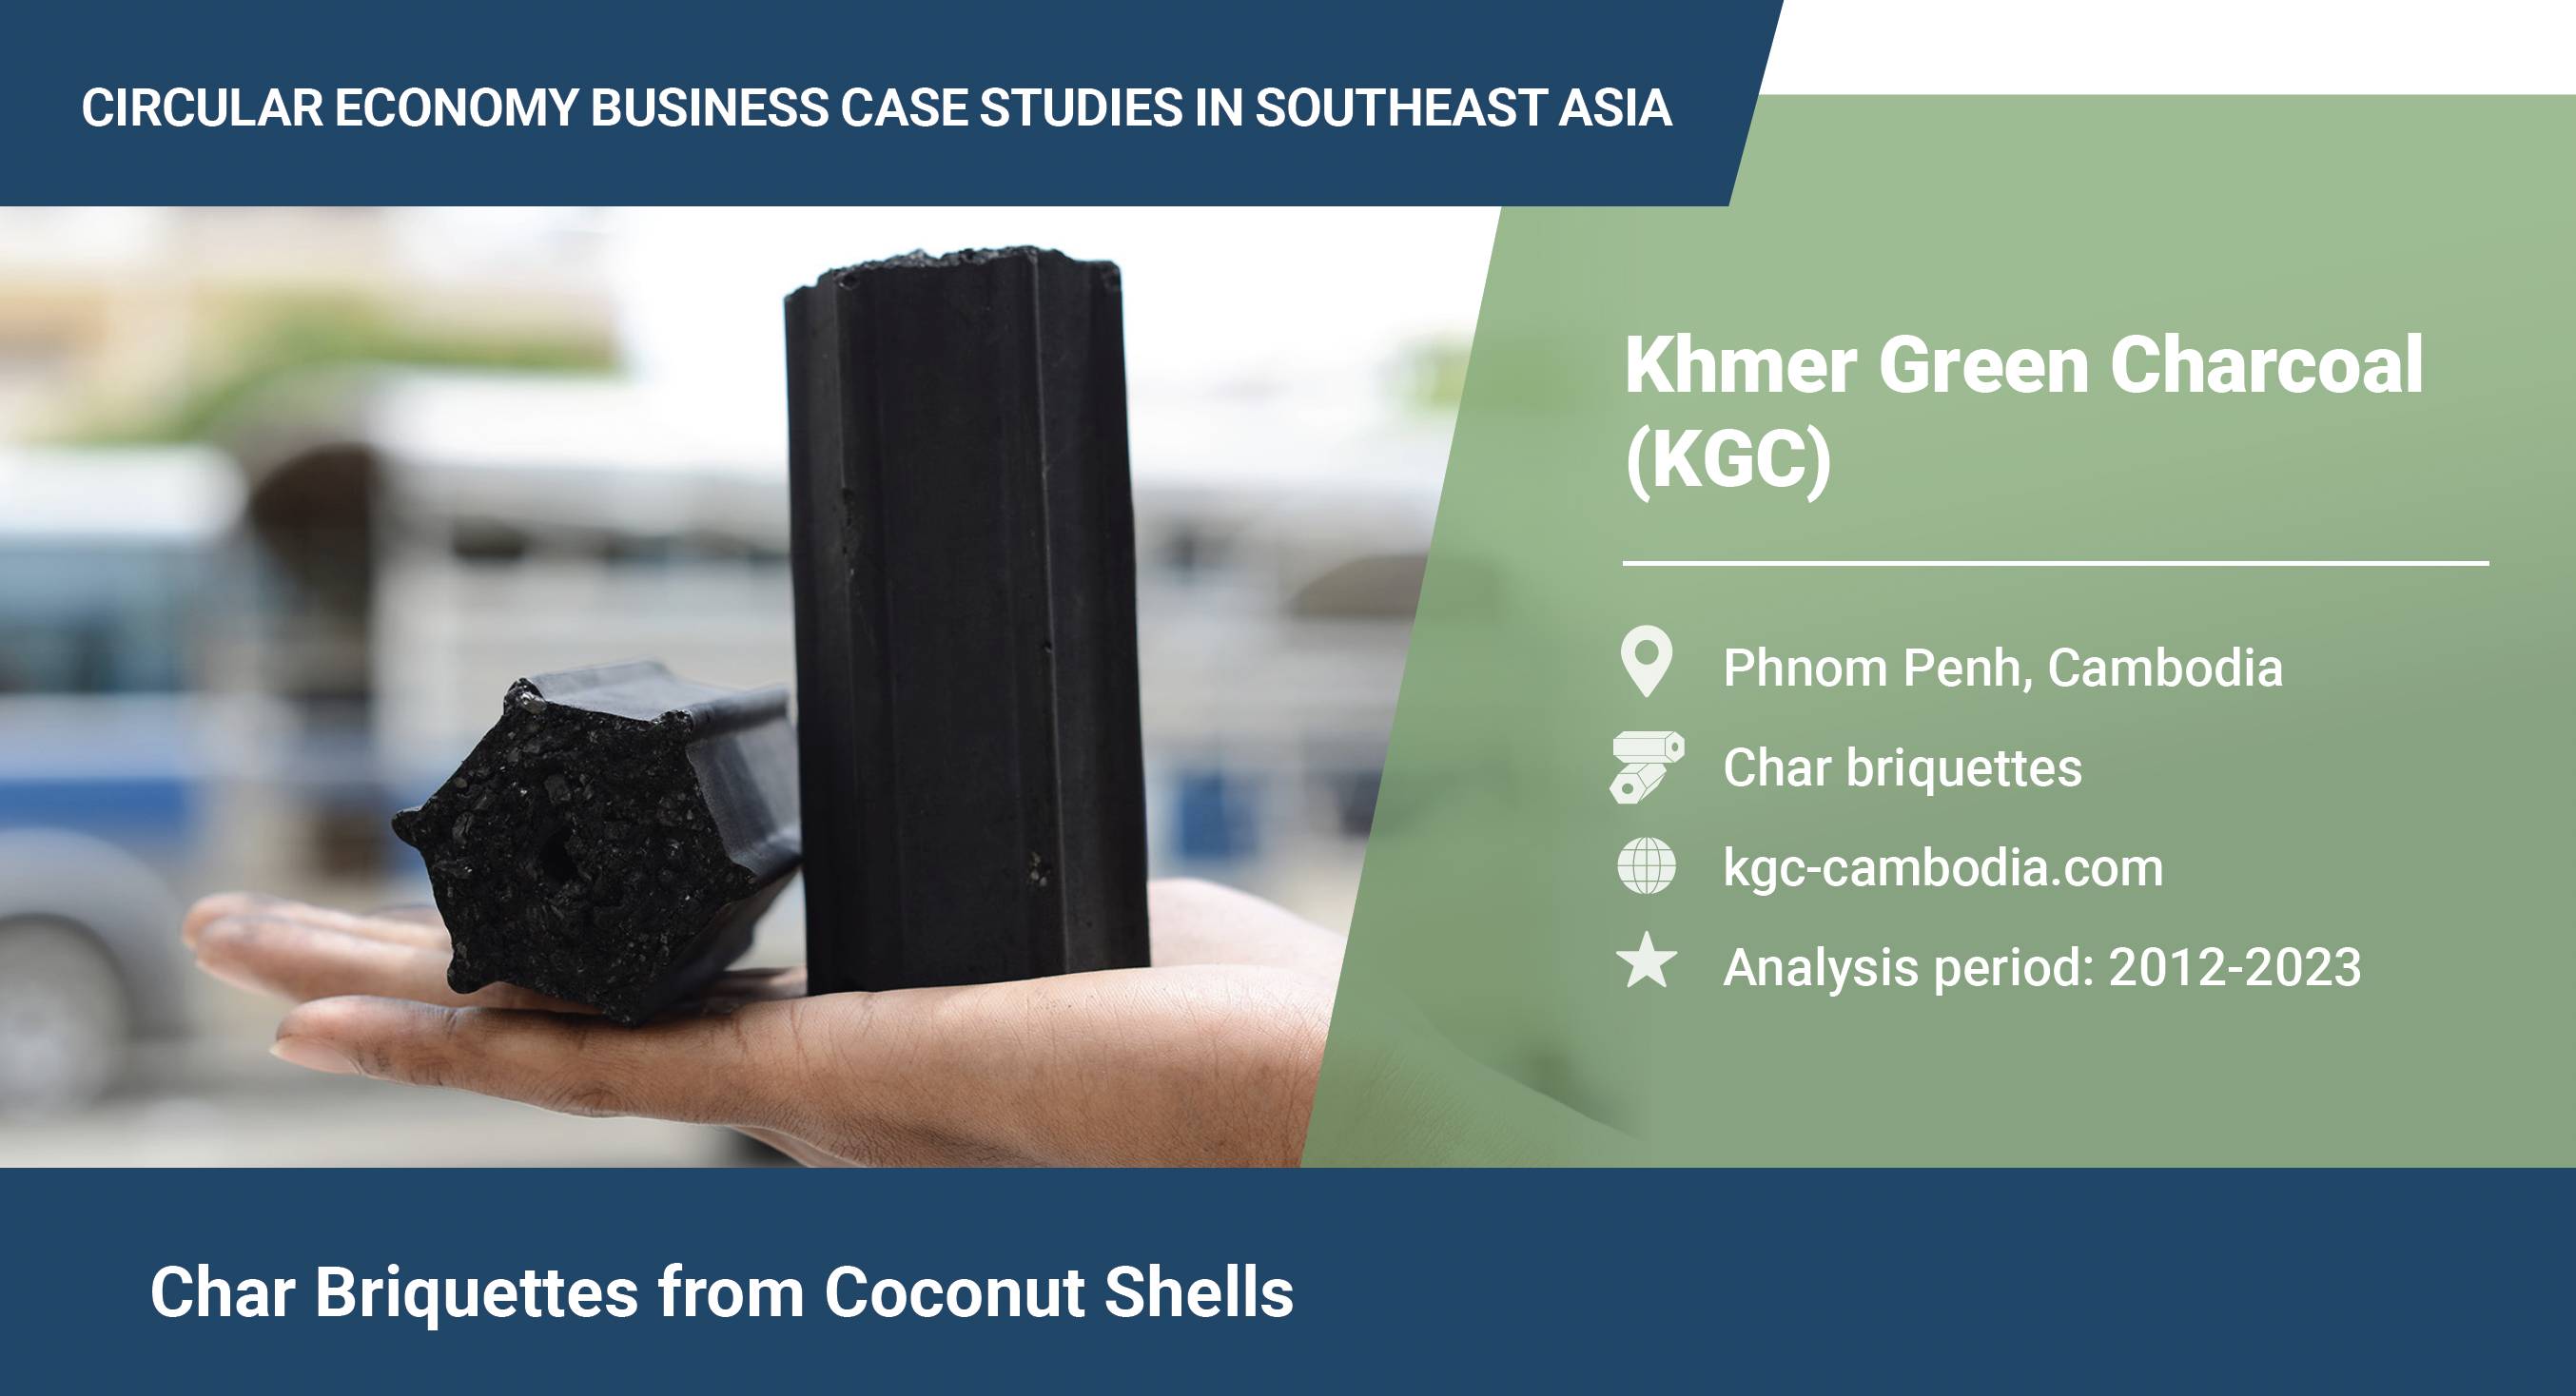 Khmer Green Charcoal